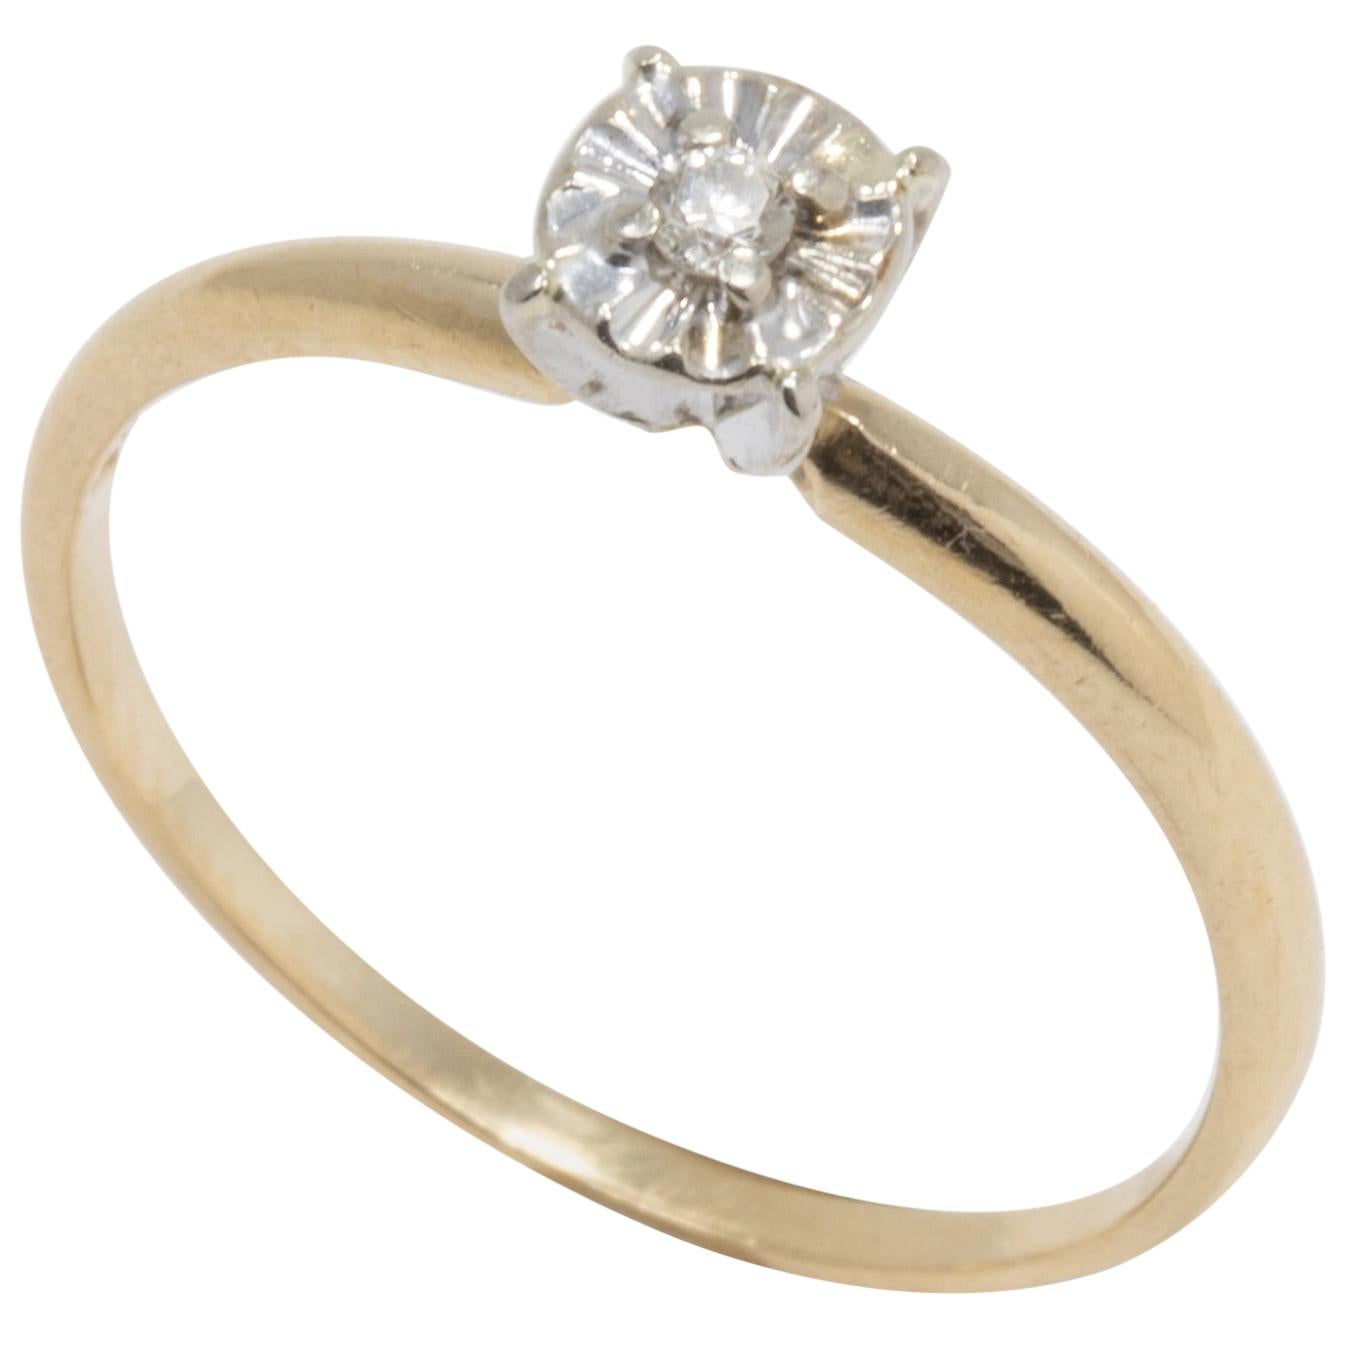 Bogo Diamond 10K Yellow Gold Custom Ring, Solitaire Prong Setting, Round Cut